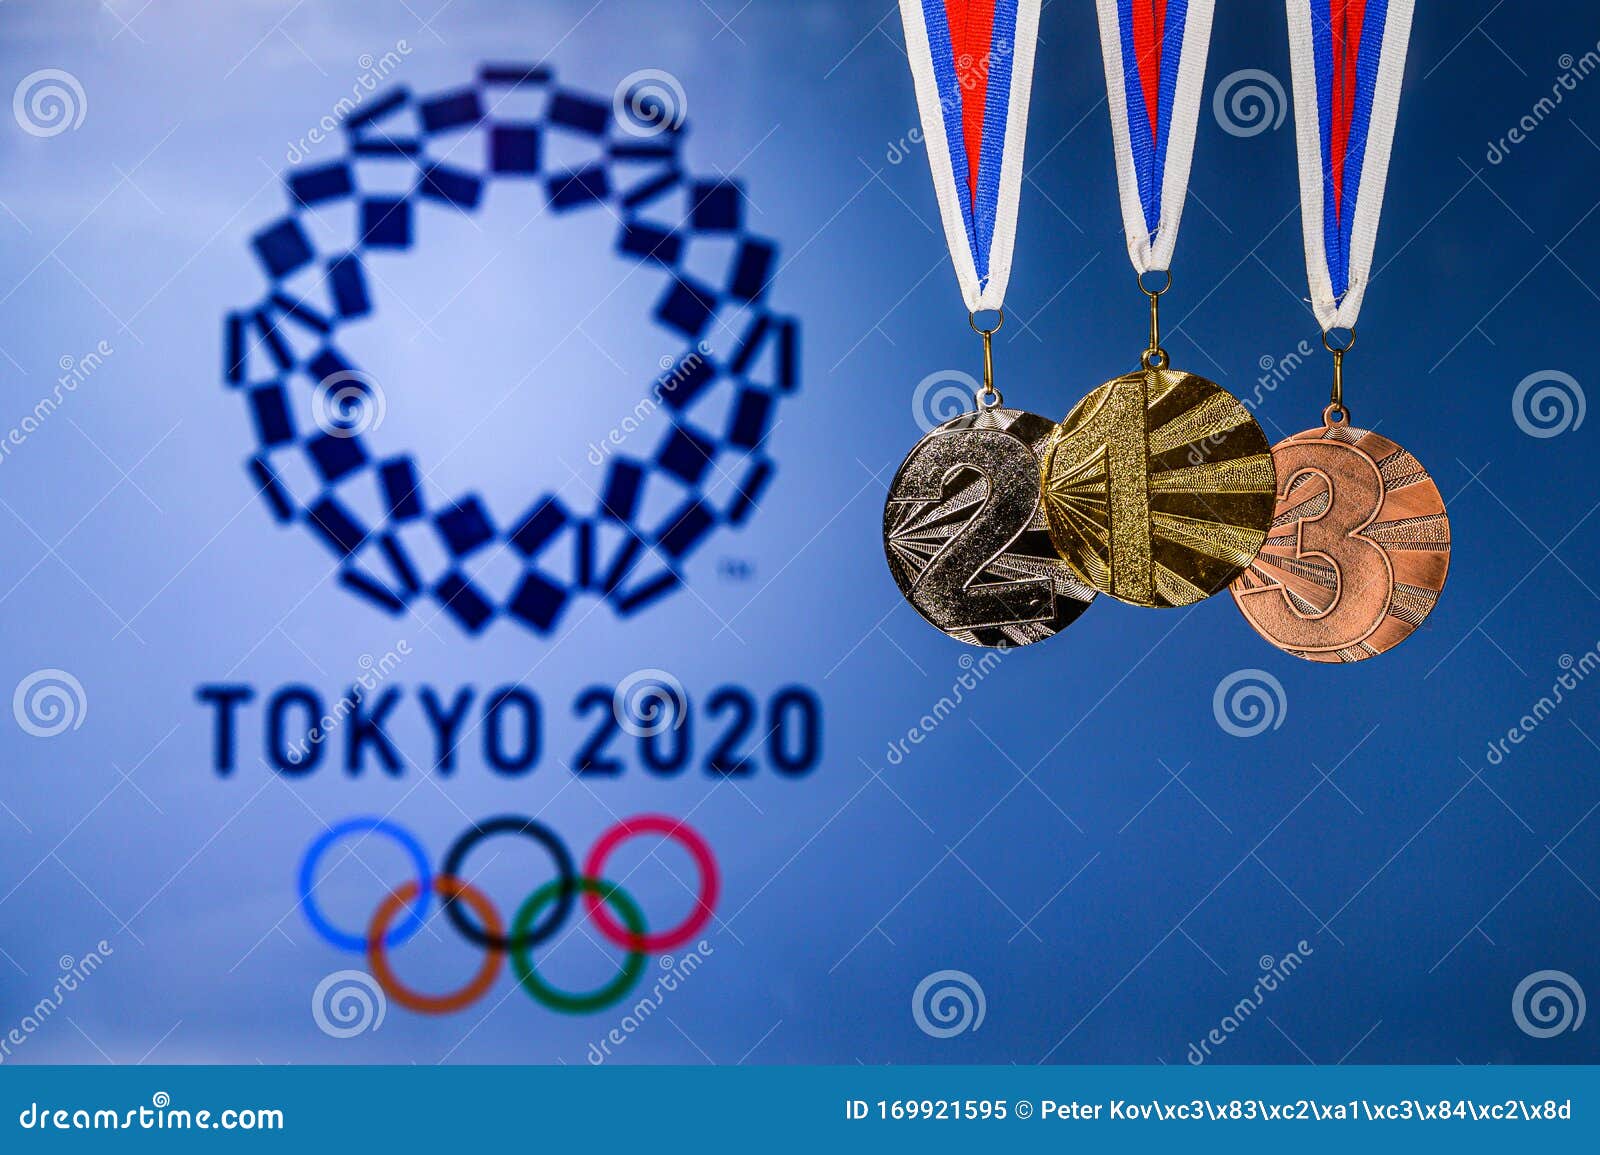 Tokyo 2020 medal olympic games Tokyo 2020